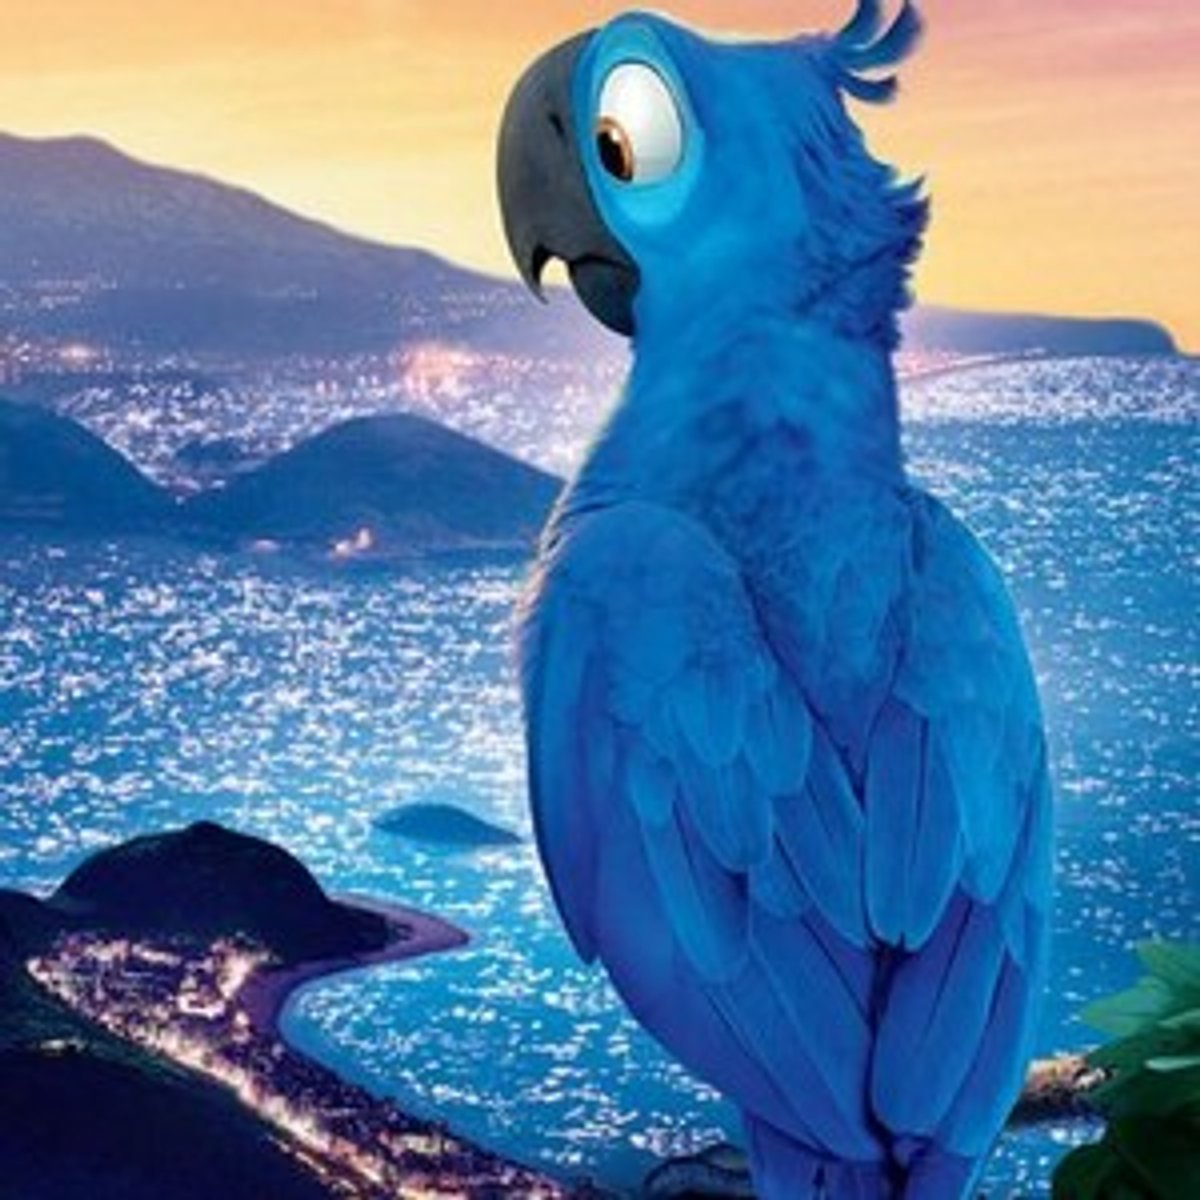 Rio попугаи